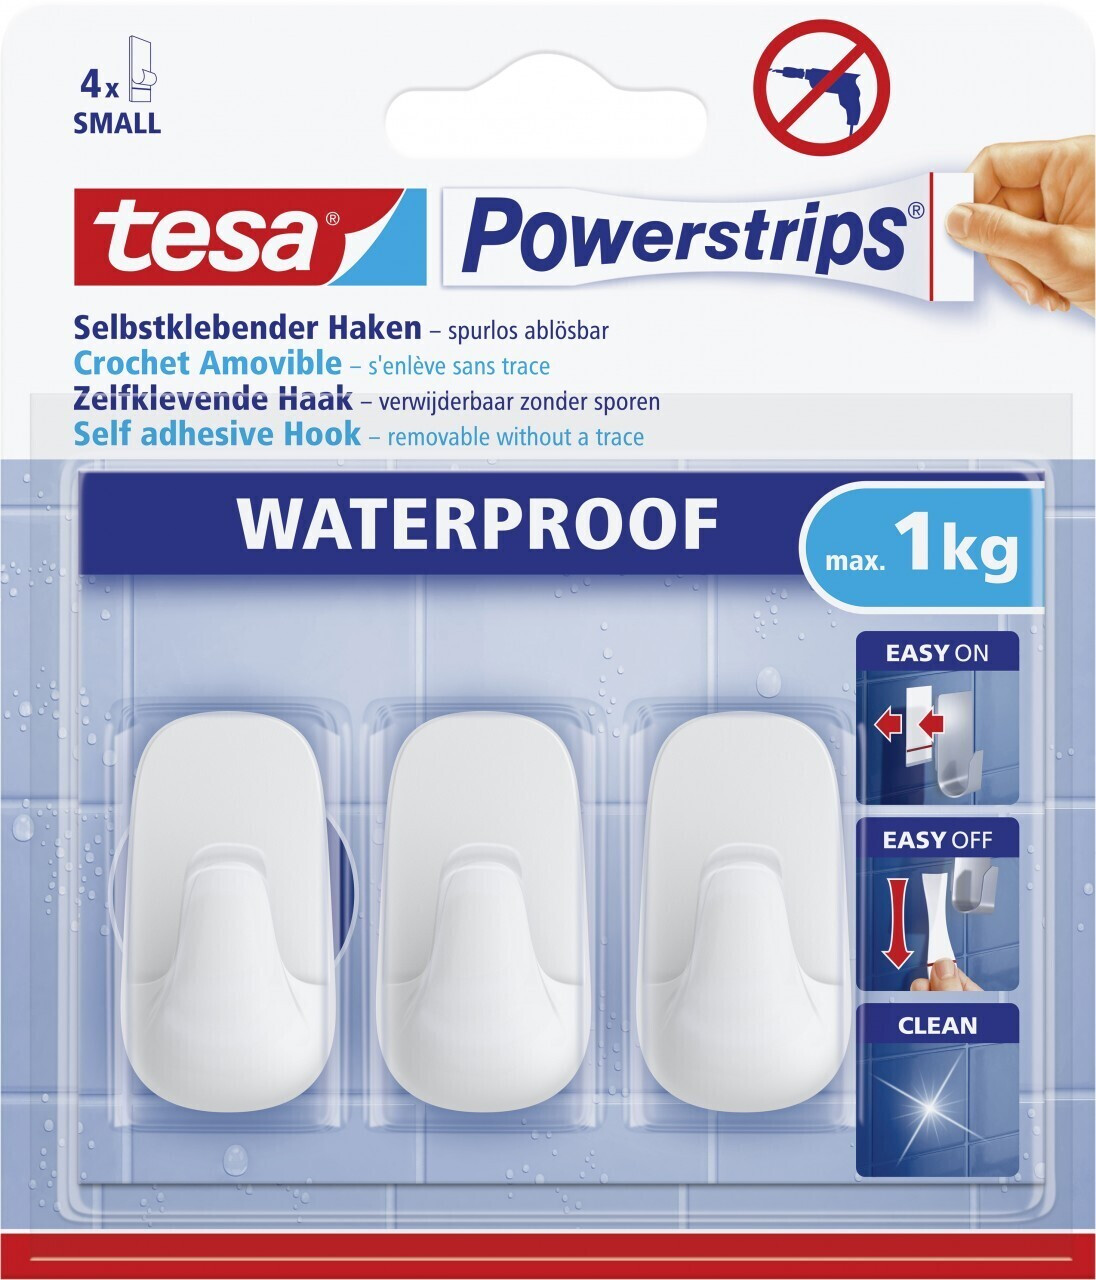 Tesa Klebehaken 59780 Powerstrips Waterproof Eckig, Small, 1kg, Edelstahl,  wasserfest, silber, 2 Stück – Böttcher AG